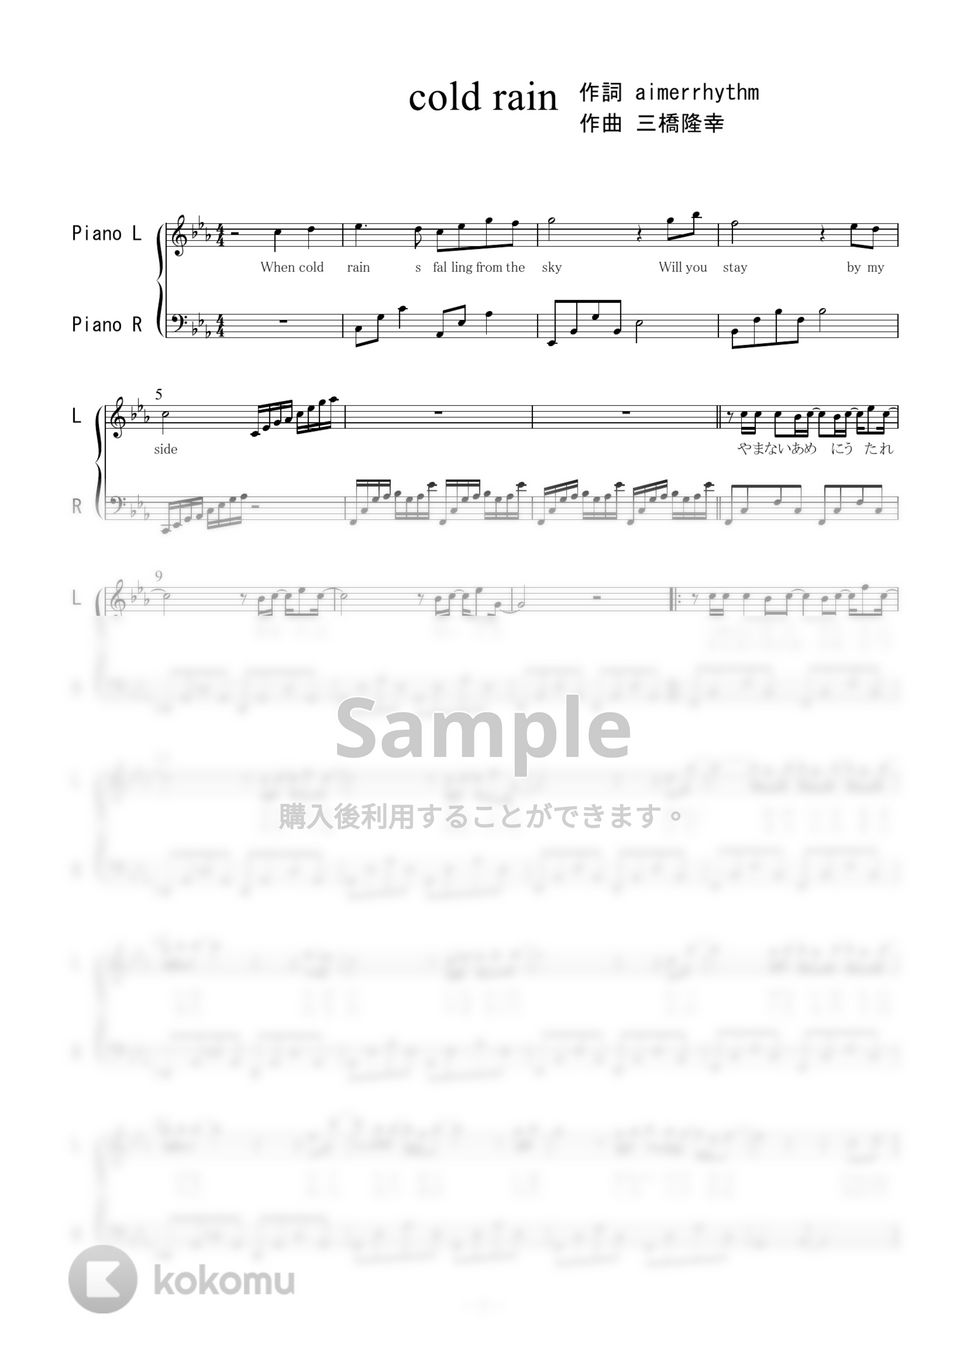 Aimer - cold rain (ピアノソロ) by 二次元楽譜製作所